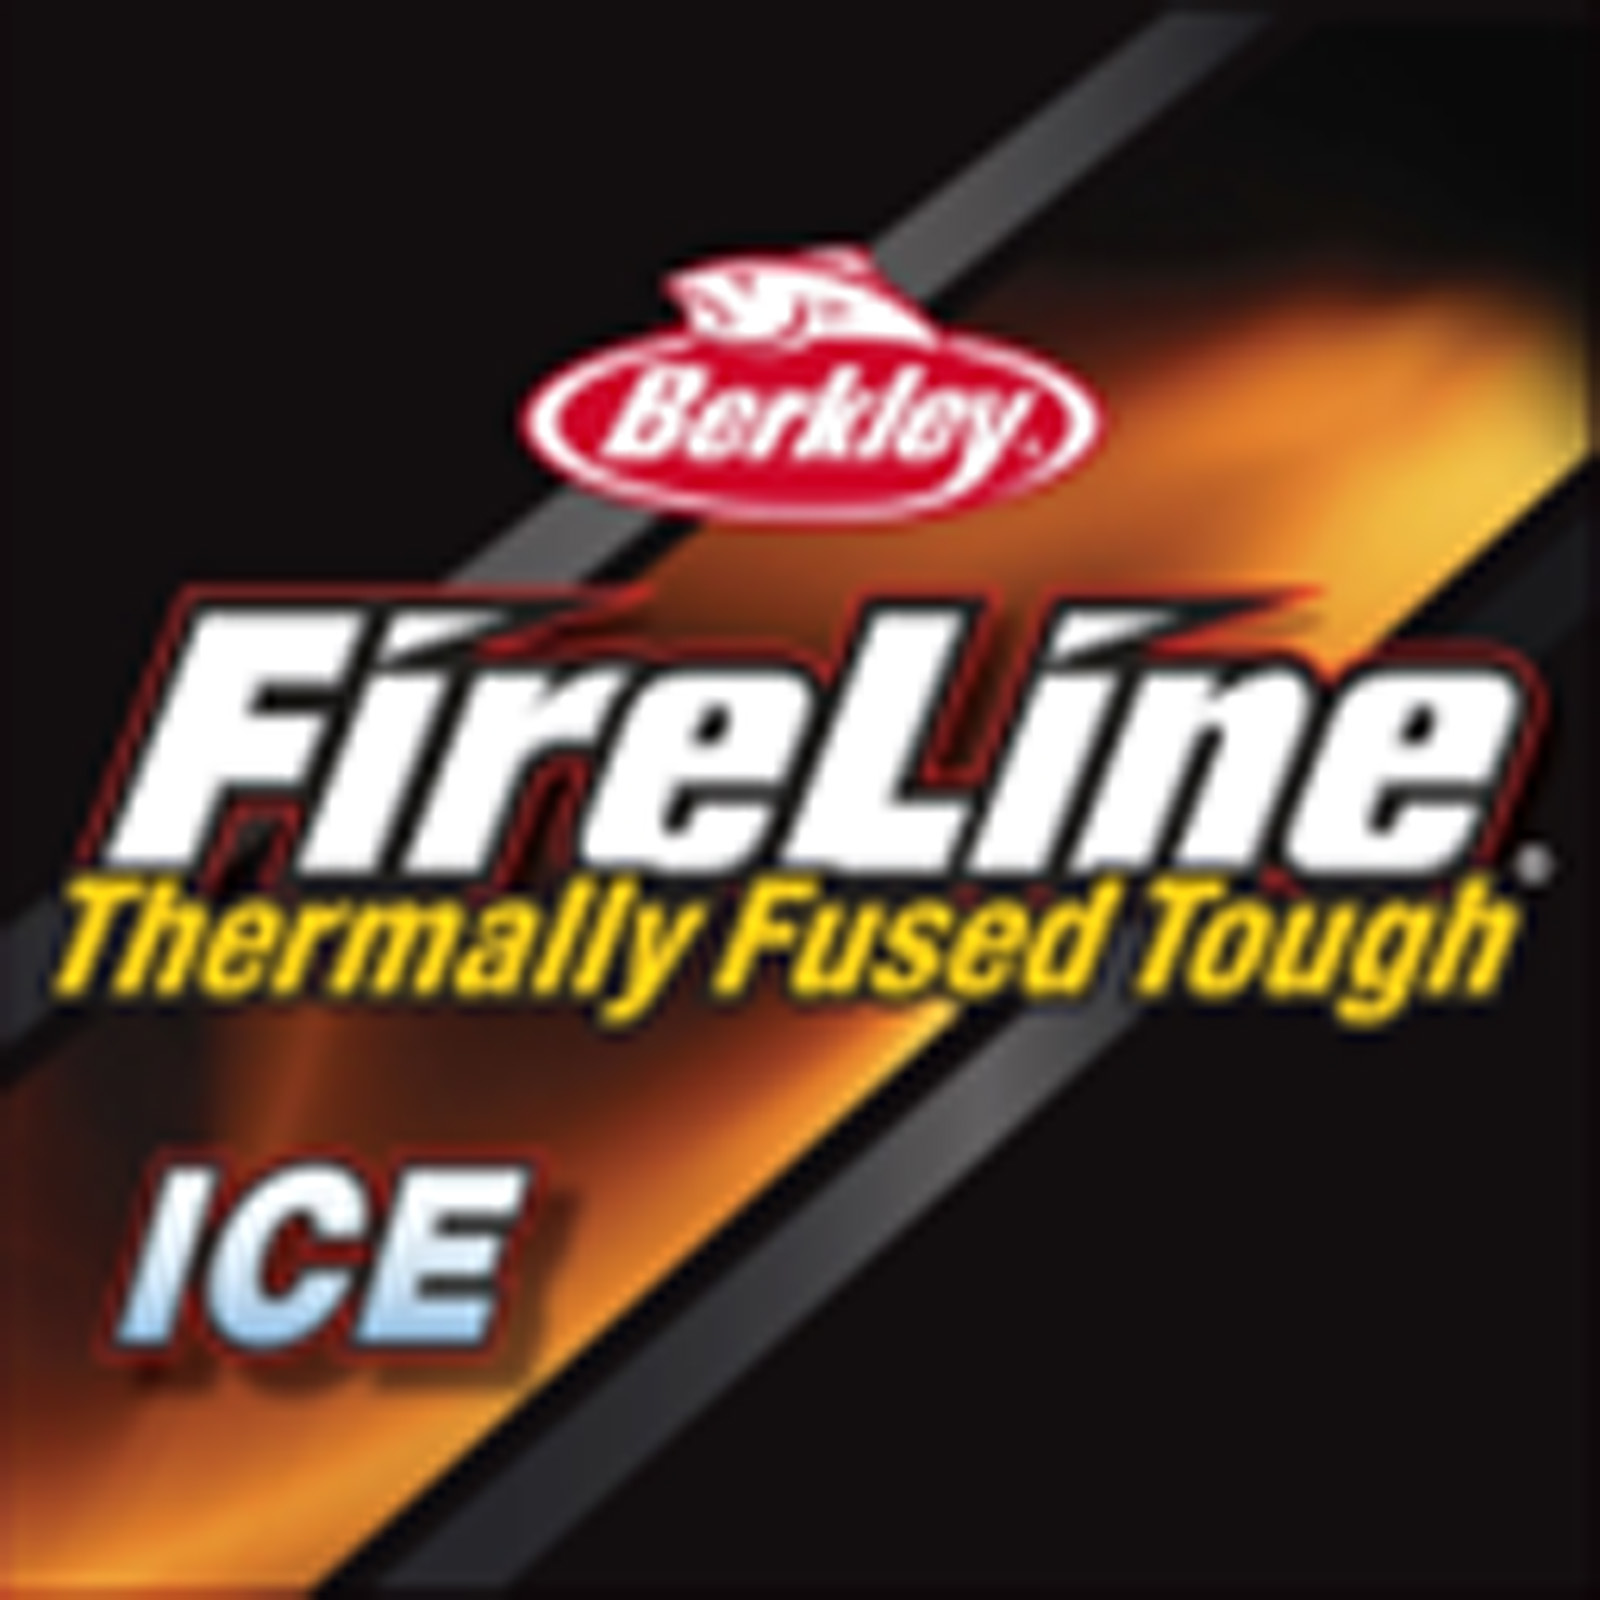 Berkley FireLine® Superline, Flame Green, 4lb